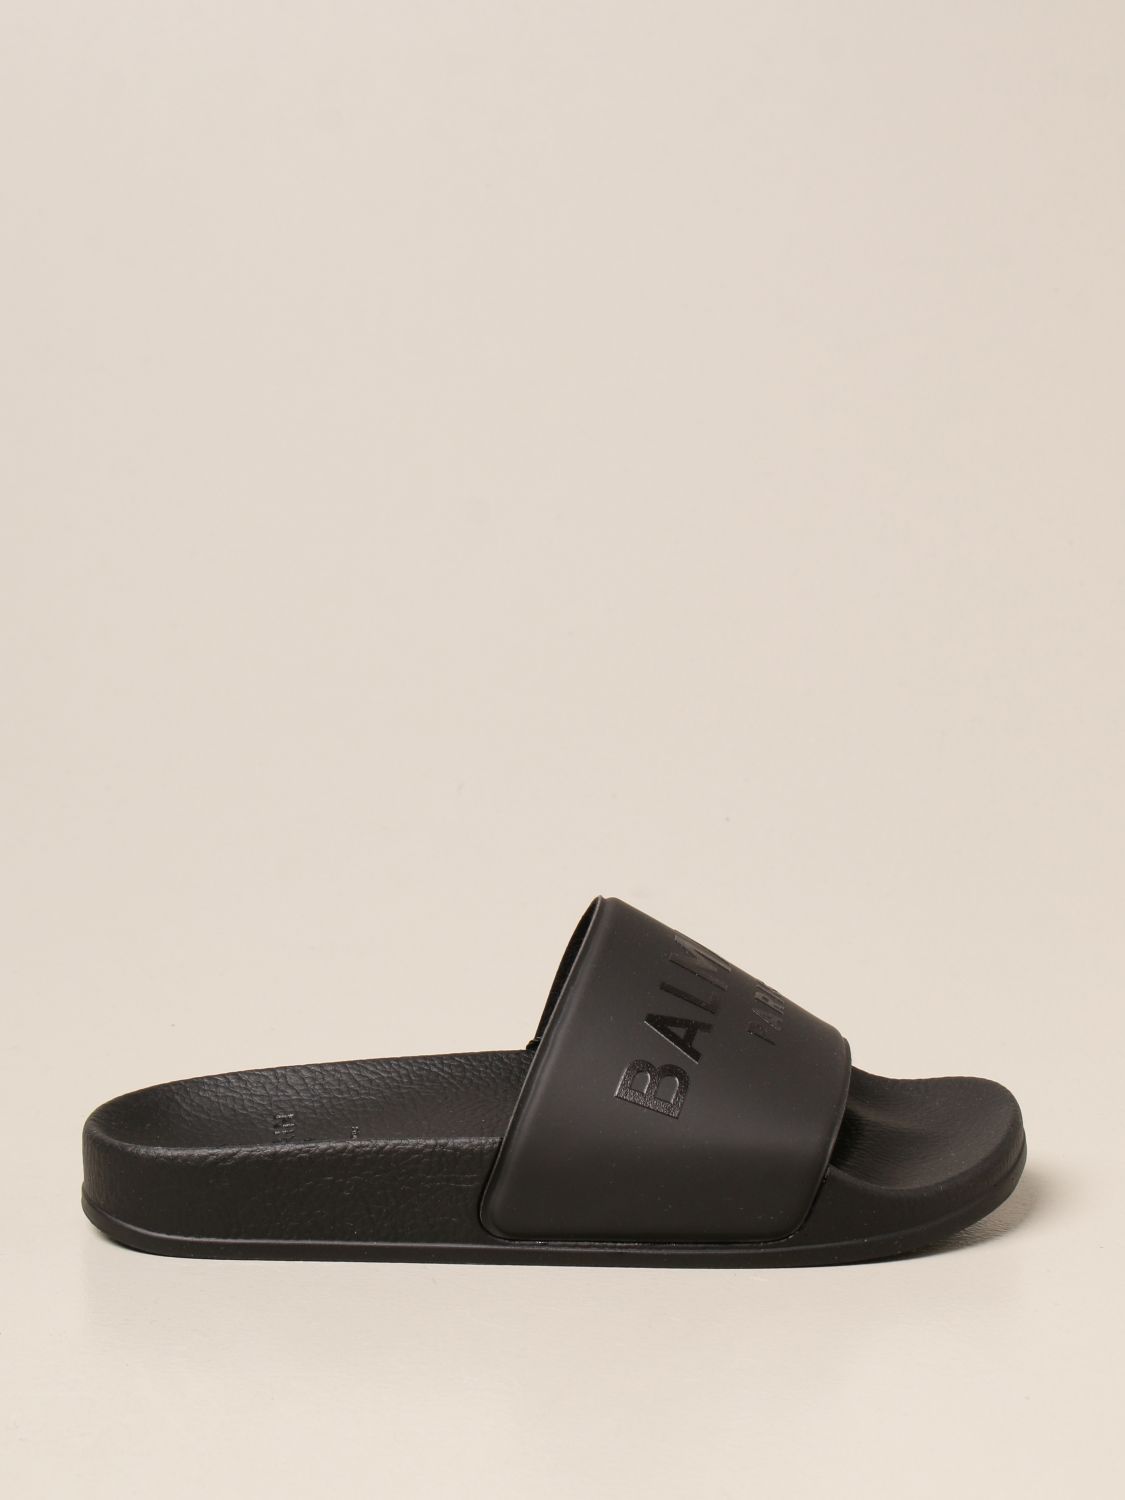 Shoes Balmain: Balmain rubber slipper sandal black 1